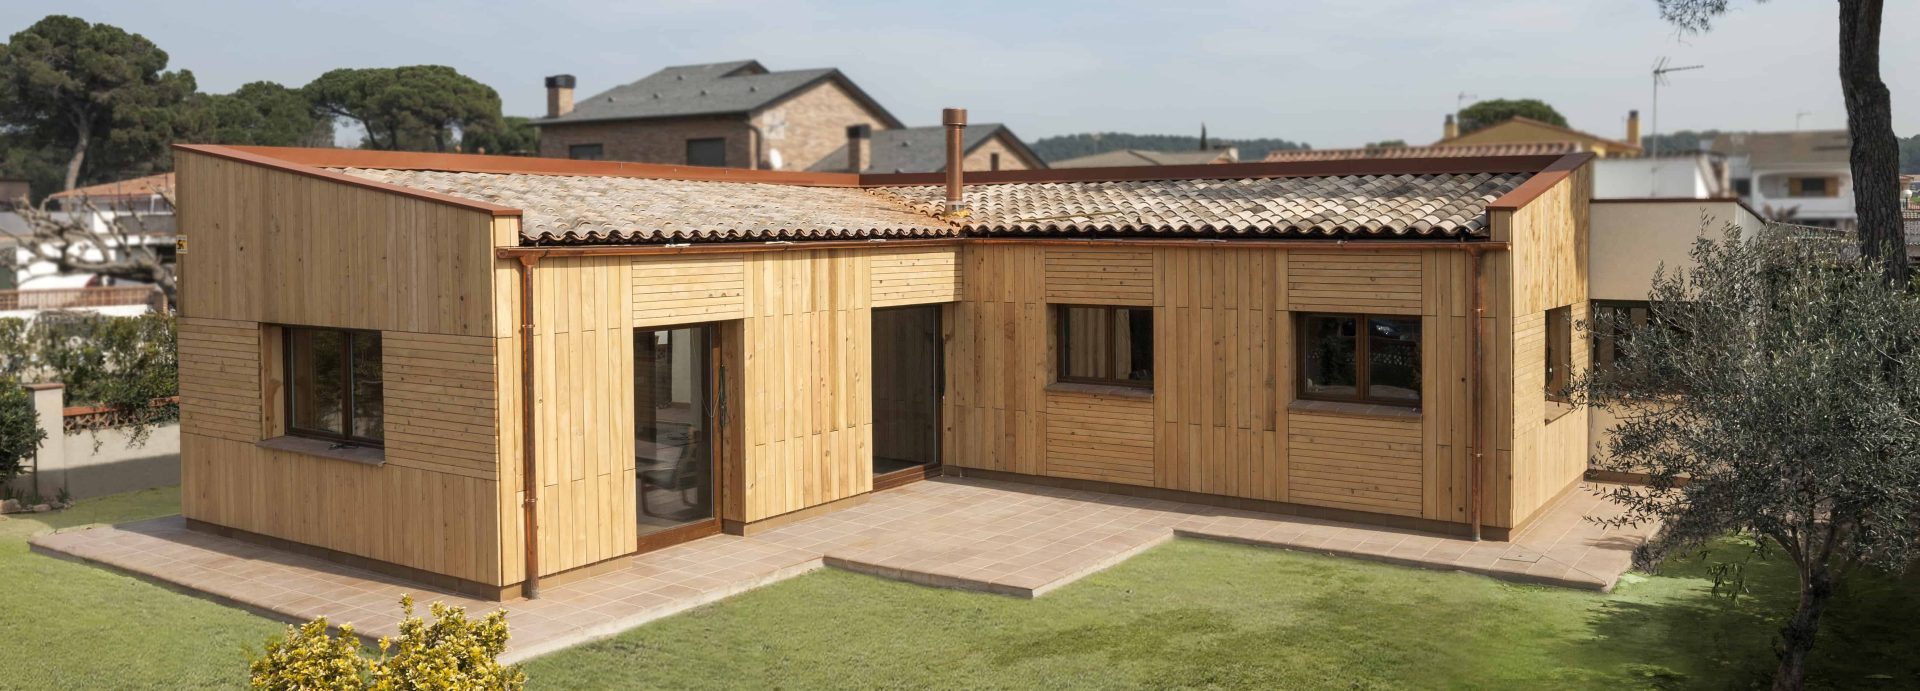 segunda casa passivhaus en cataluña